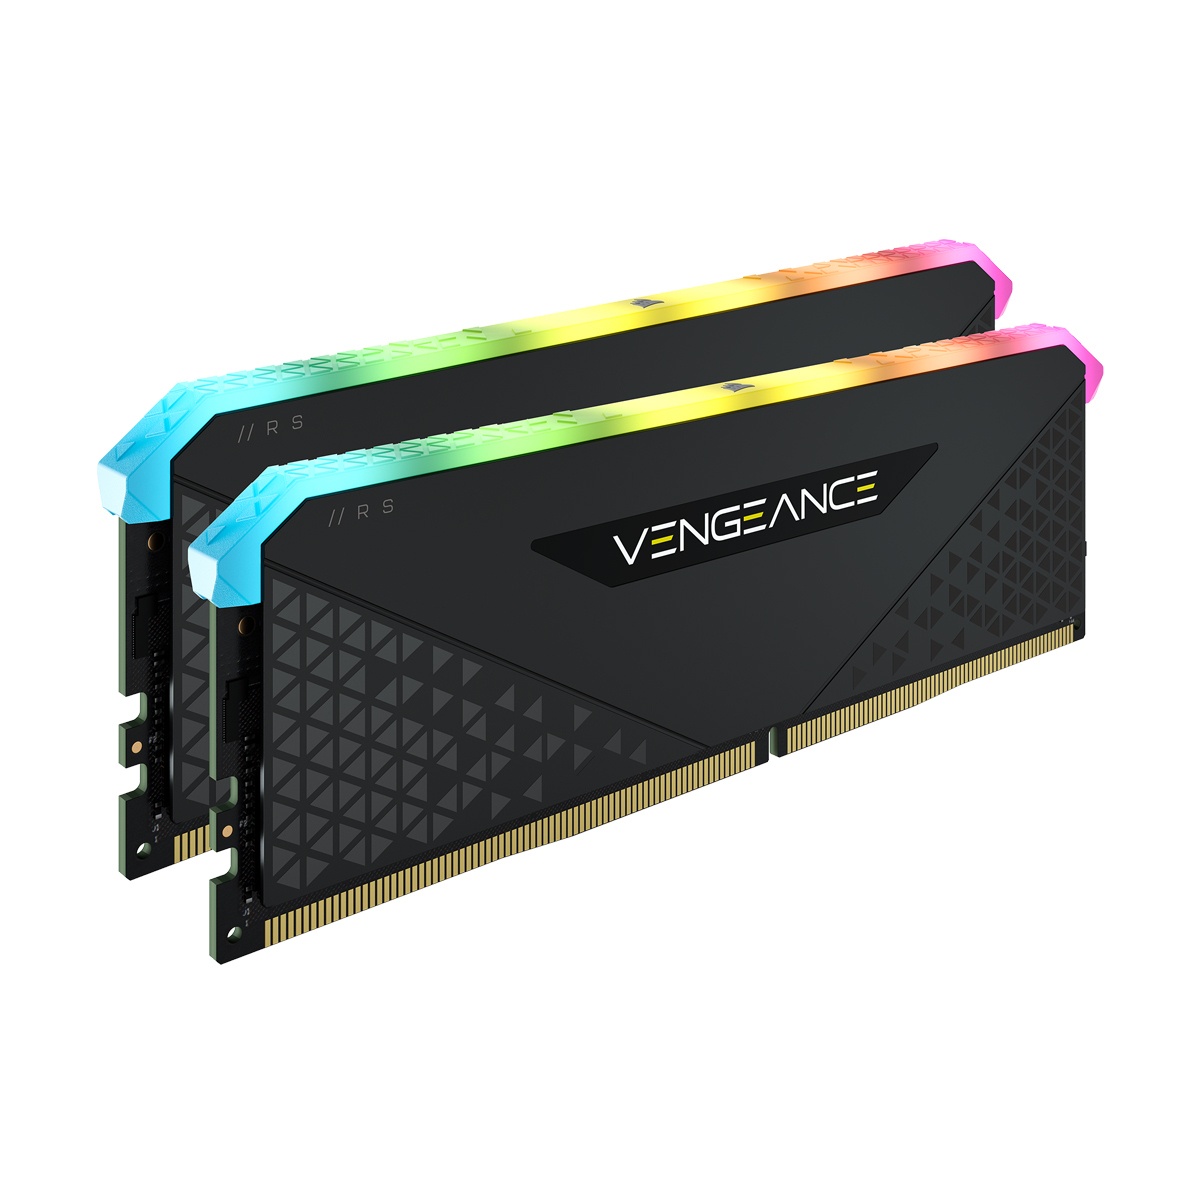 Bild von Vengeance RGB RS DIMM Kit 32GB, DDR4-3200, CL16-20-20-38 (CMG32GX4M2E3200C16)